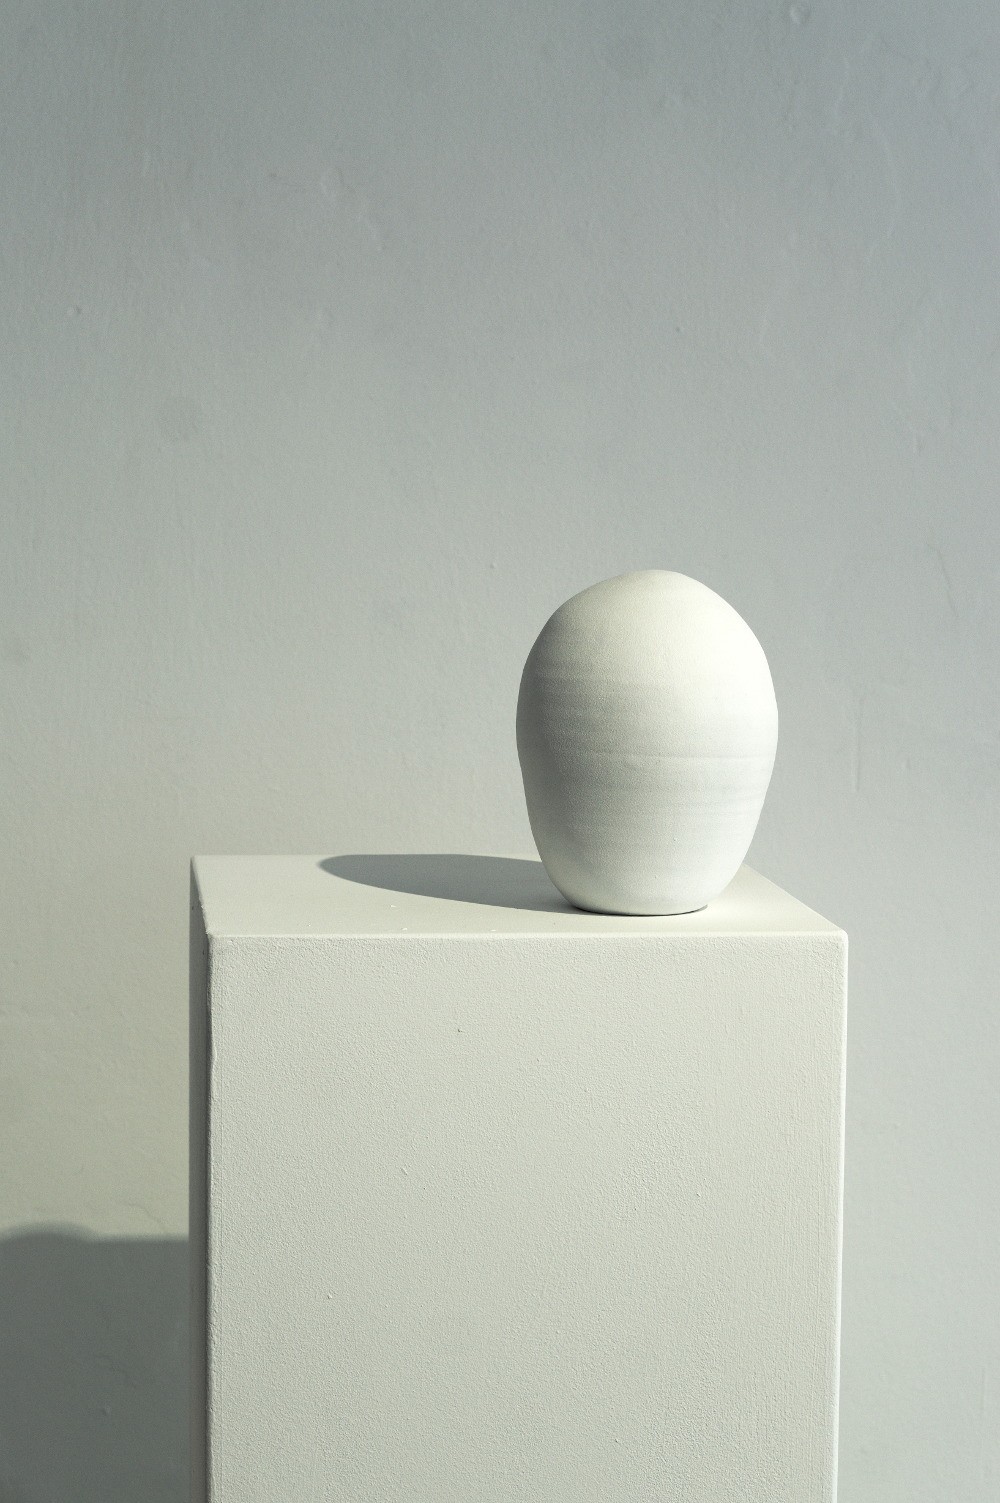 »Eule« / Keramik, Acryl, Sockel / 143,0 x 40,0 x 40,0 cm, 2016